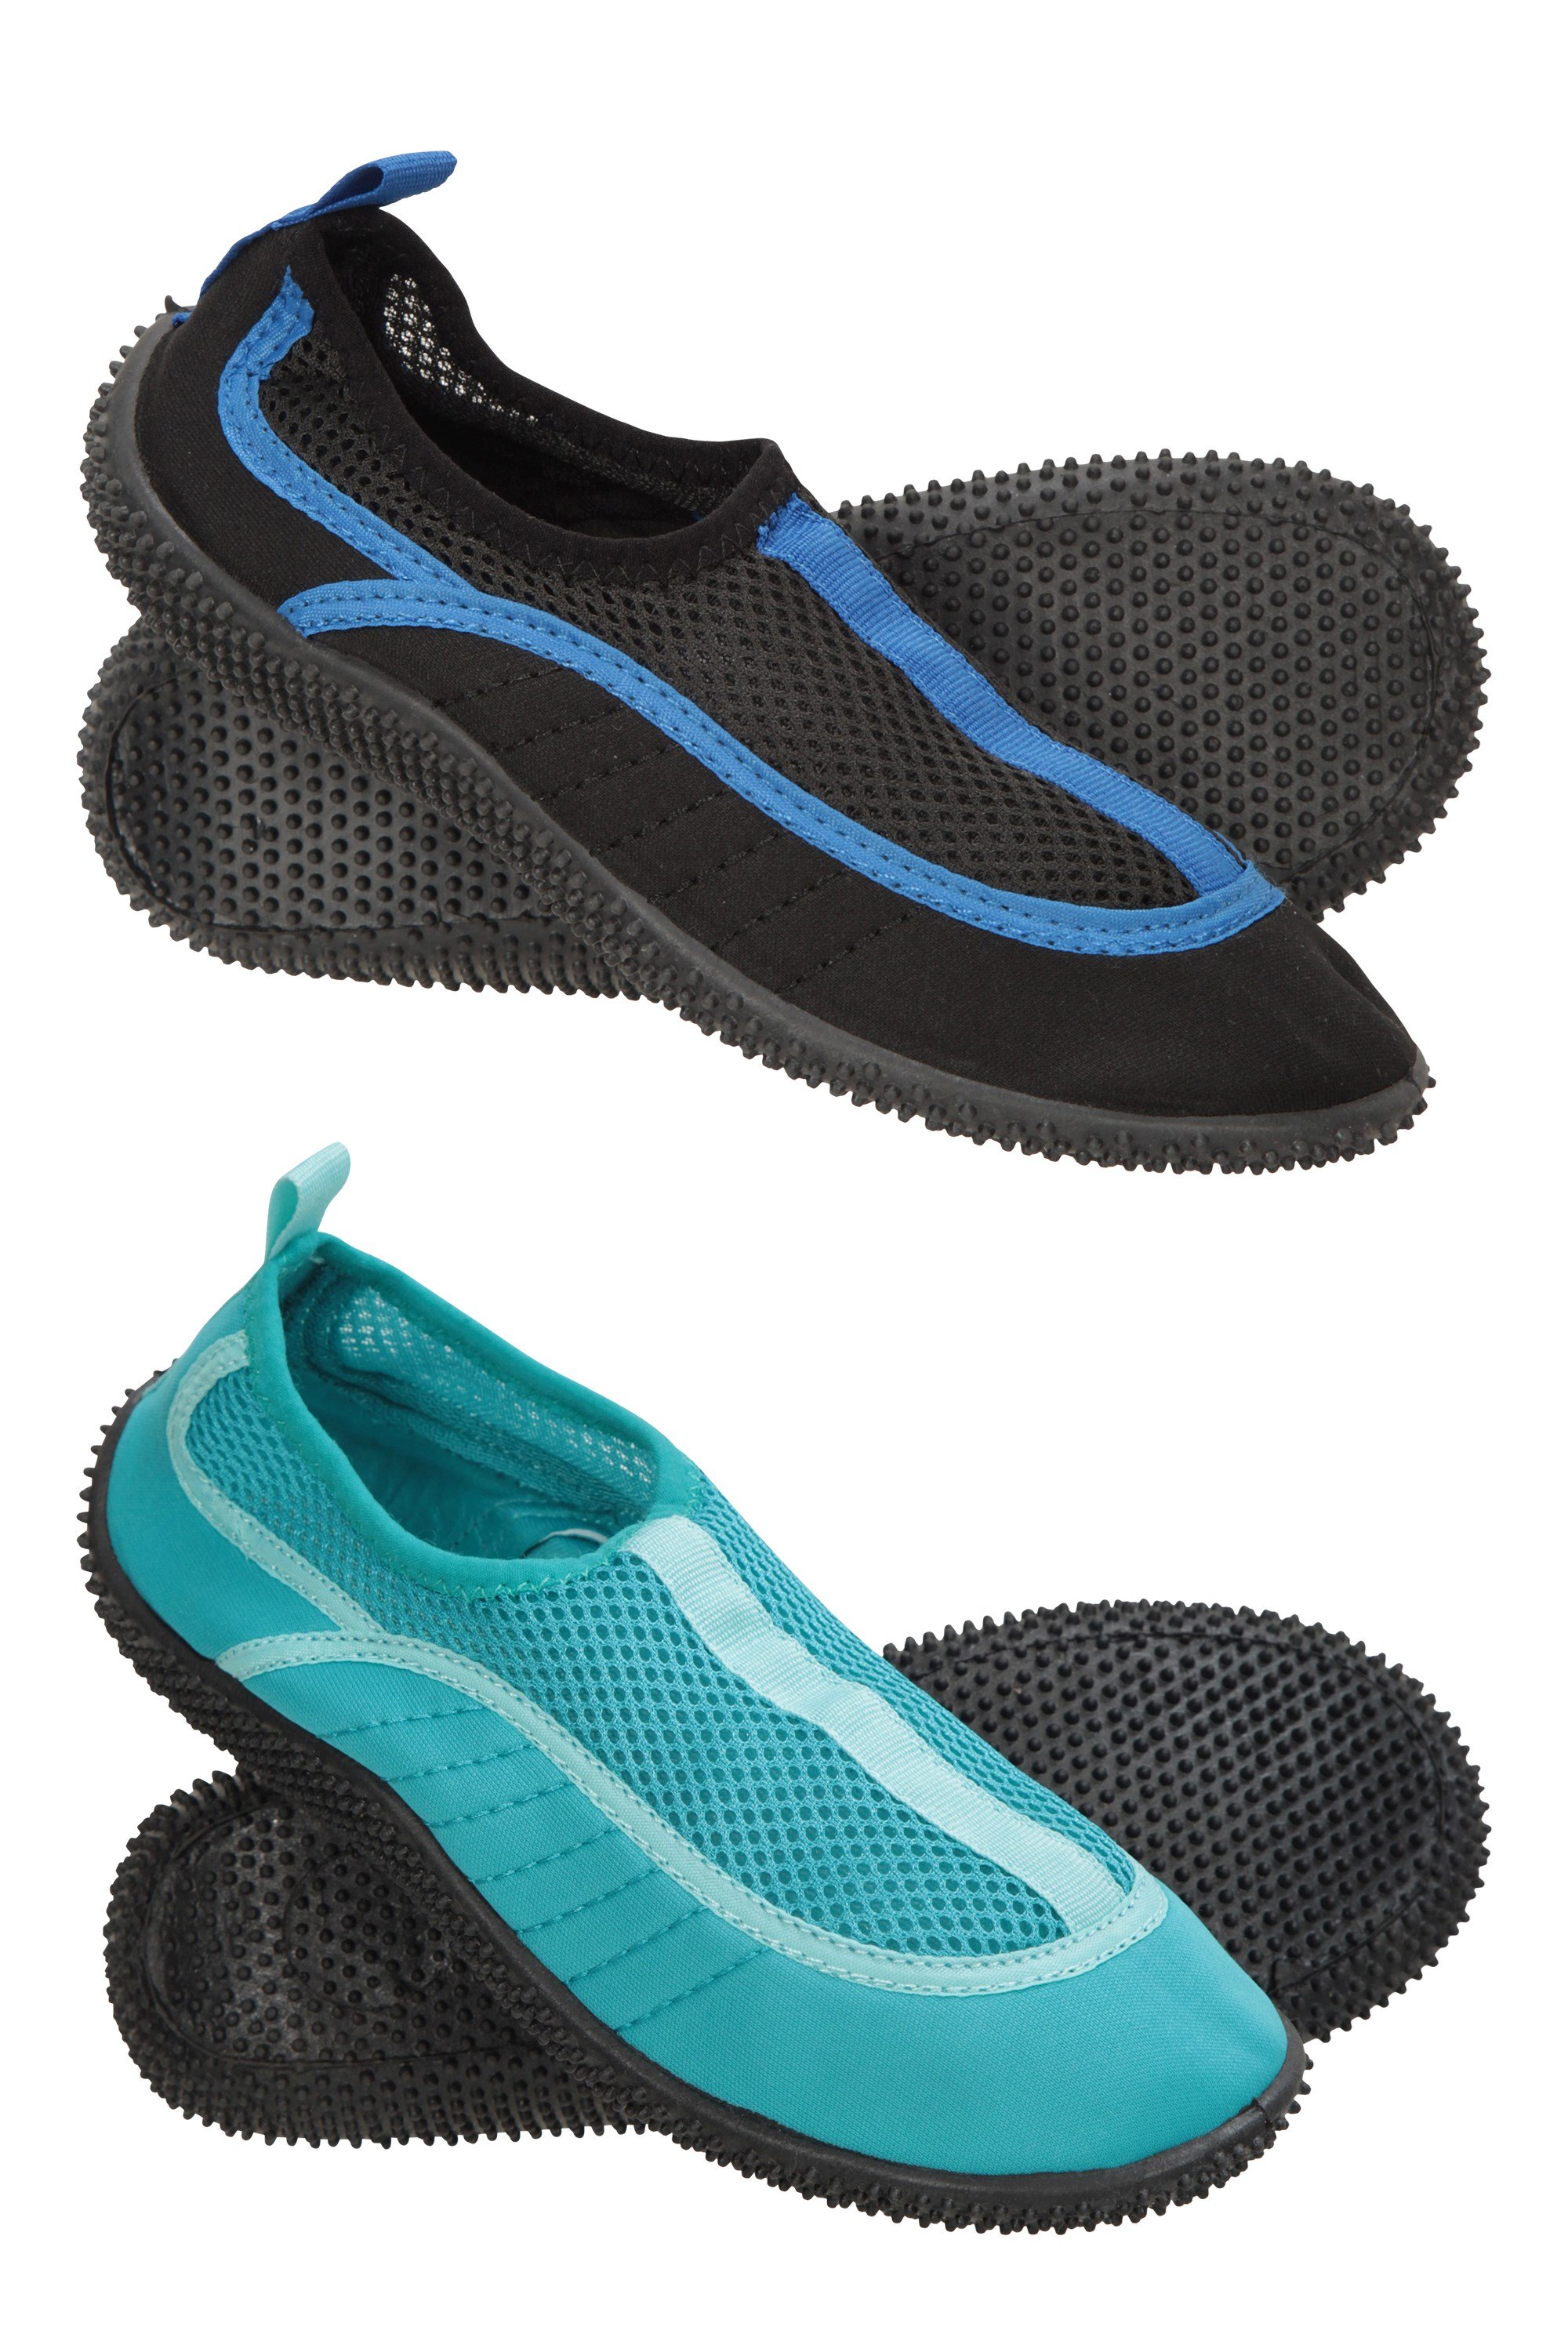 Easy Slip On Water Shoes Protection for Underwater Summer Walks Mesh Panel Swim Shoes Lightweight Wet Shoes Neoprene Mountain Warehouse Bermuda Men’s Aqua Shoe 